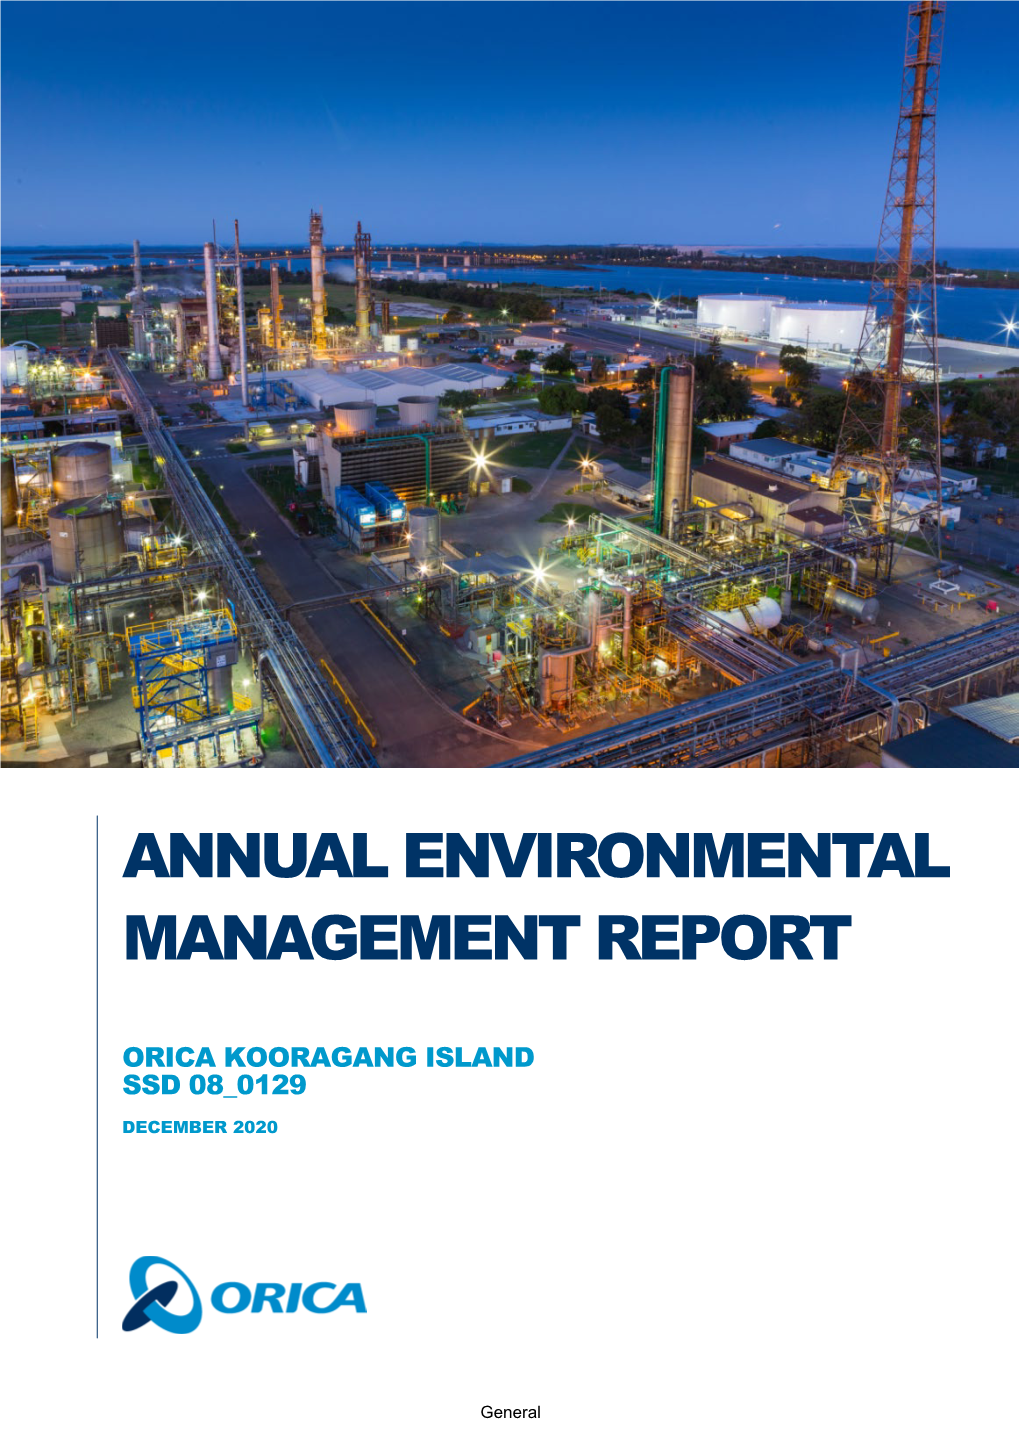 2020 Annual Environmental Management Report